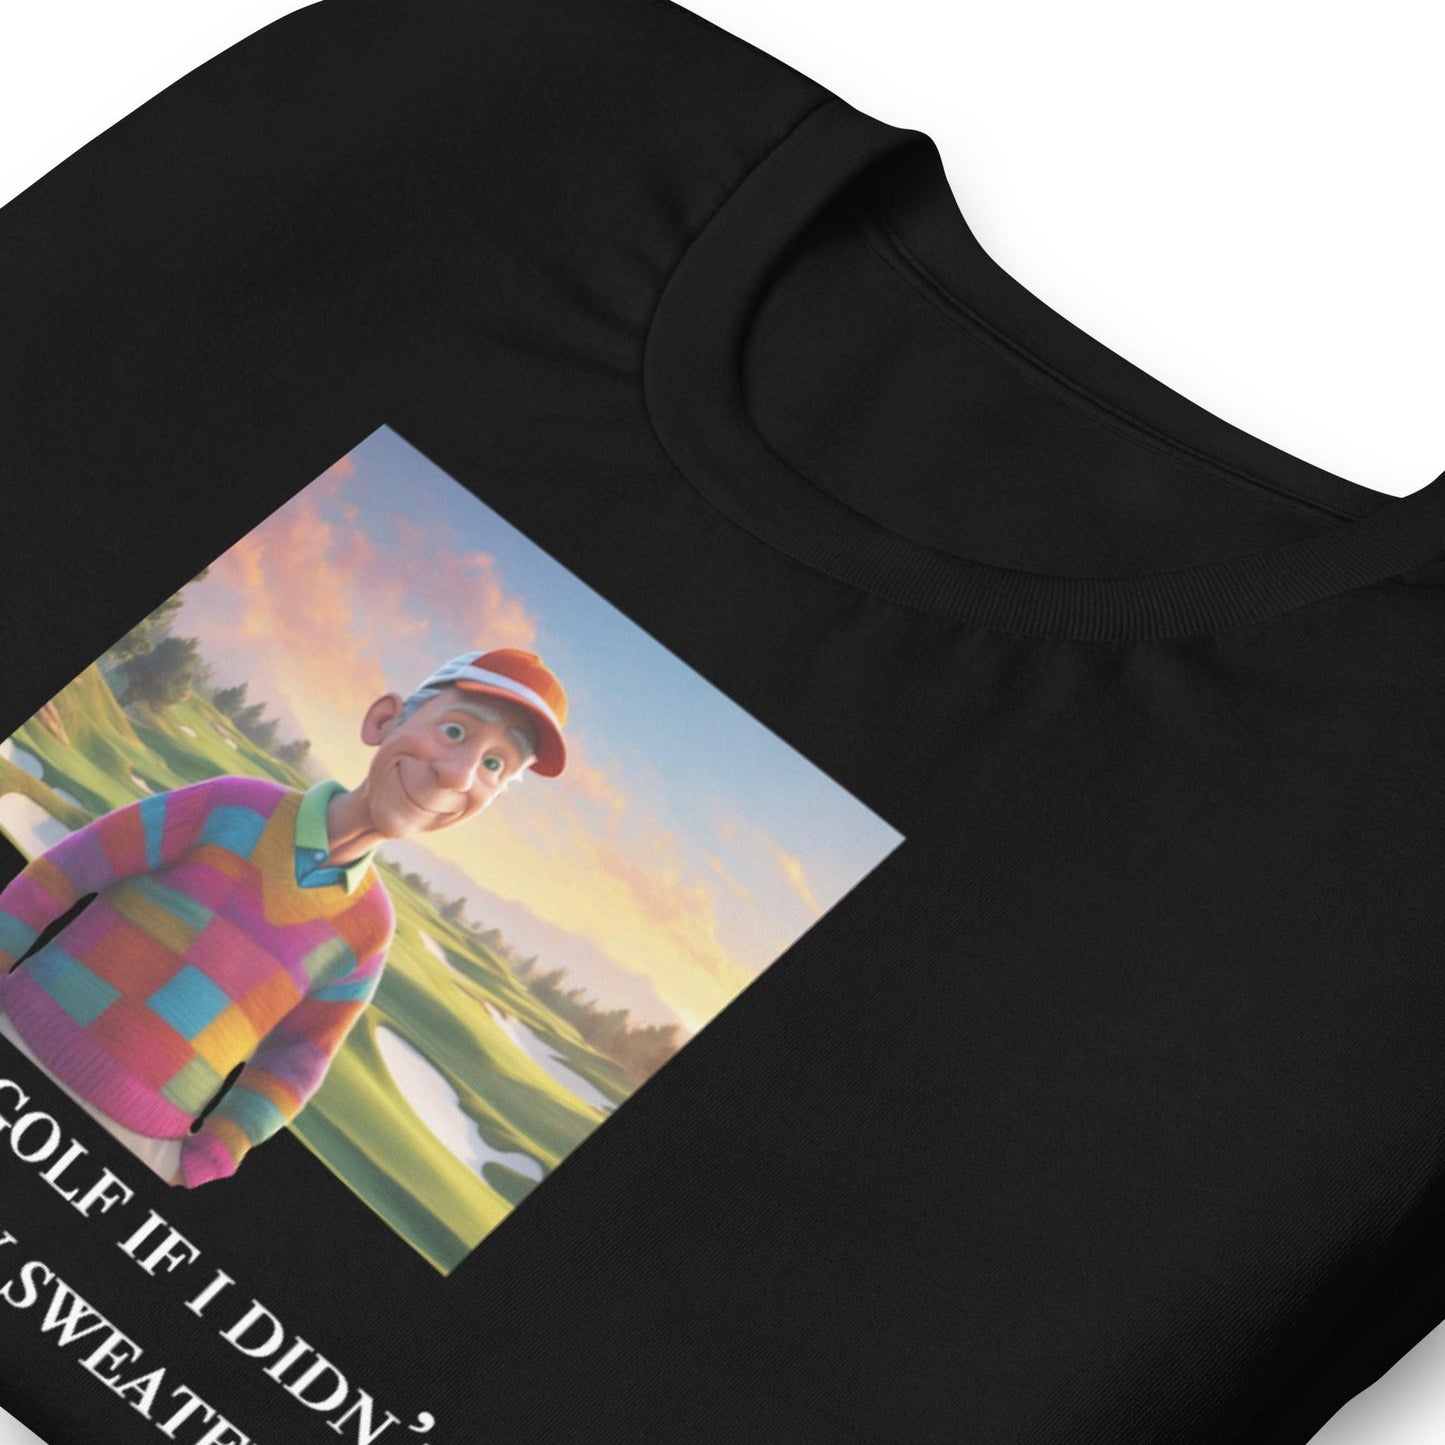 Golf Sweaters T-shirt - Game Yarns